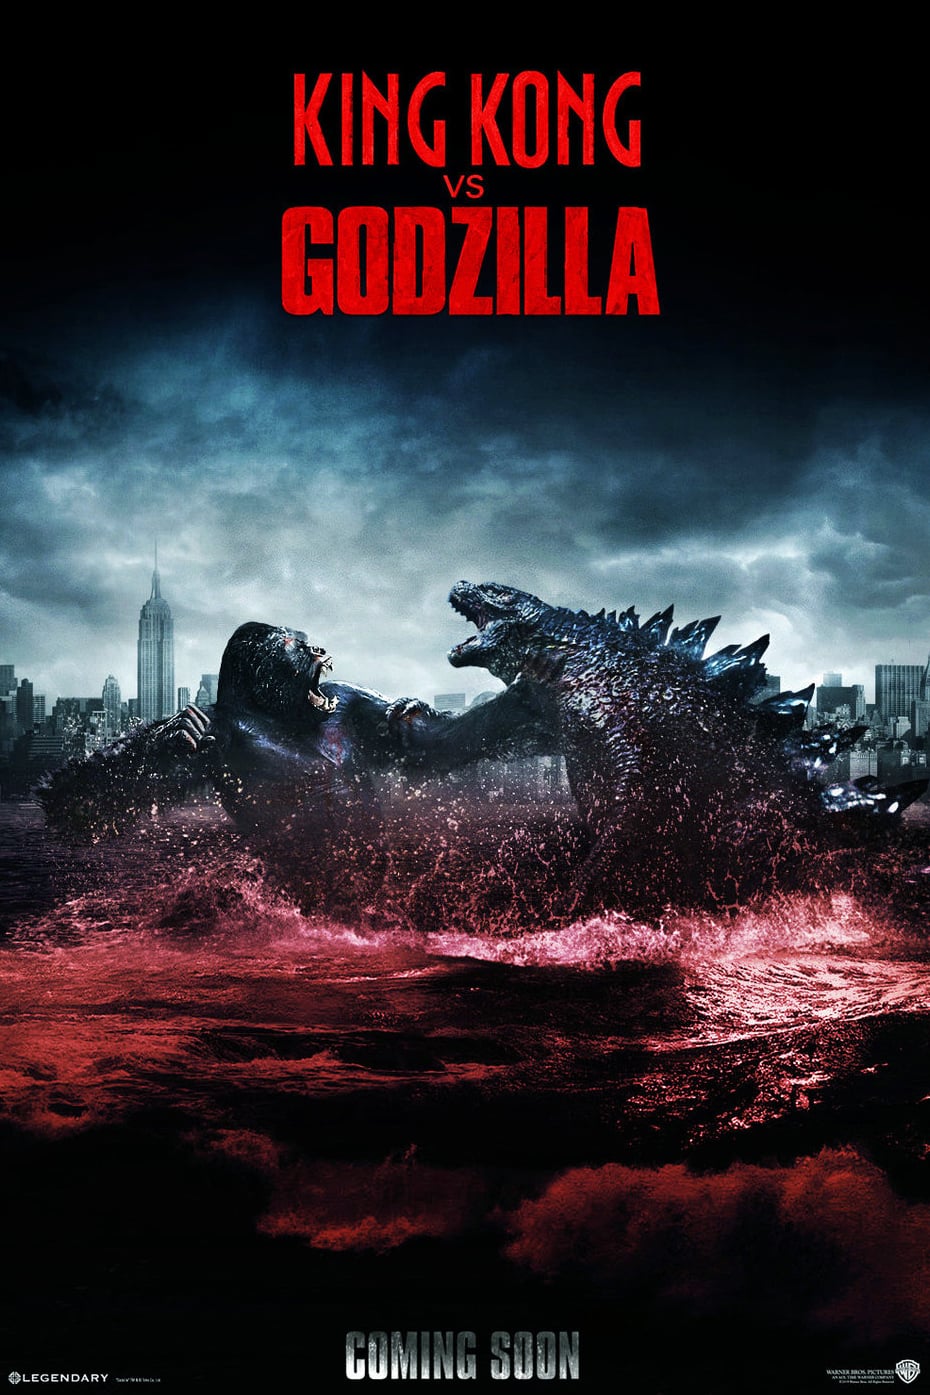 Poster for the movie "Godzilla vs. Kong"